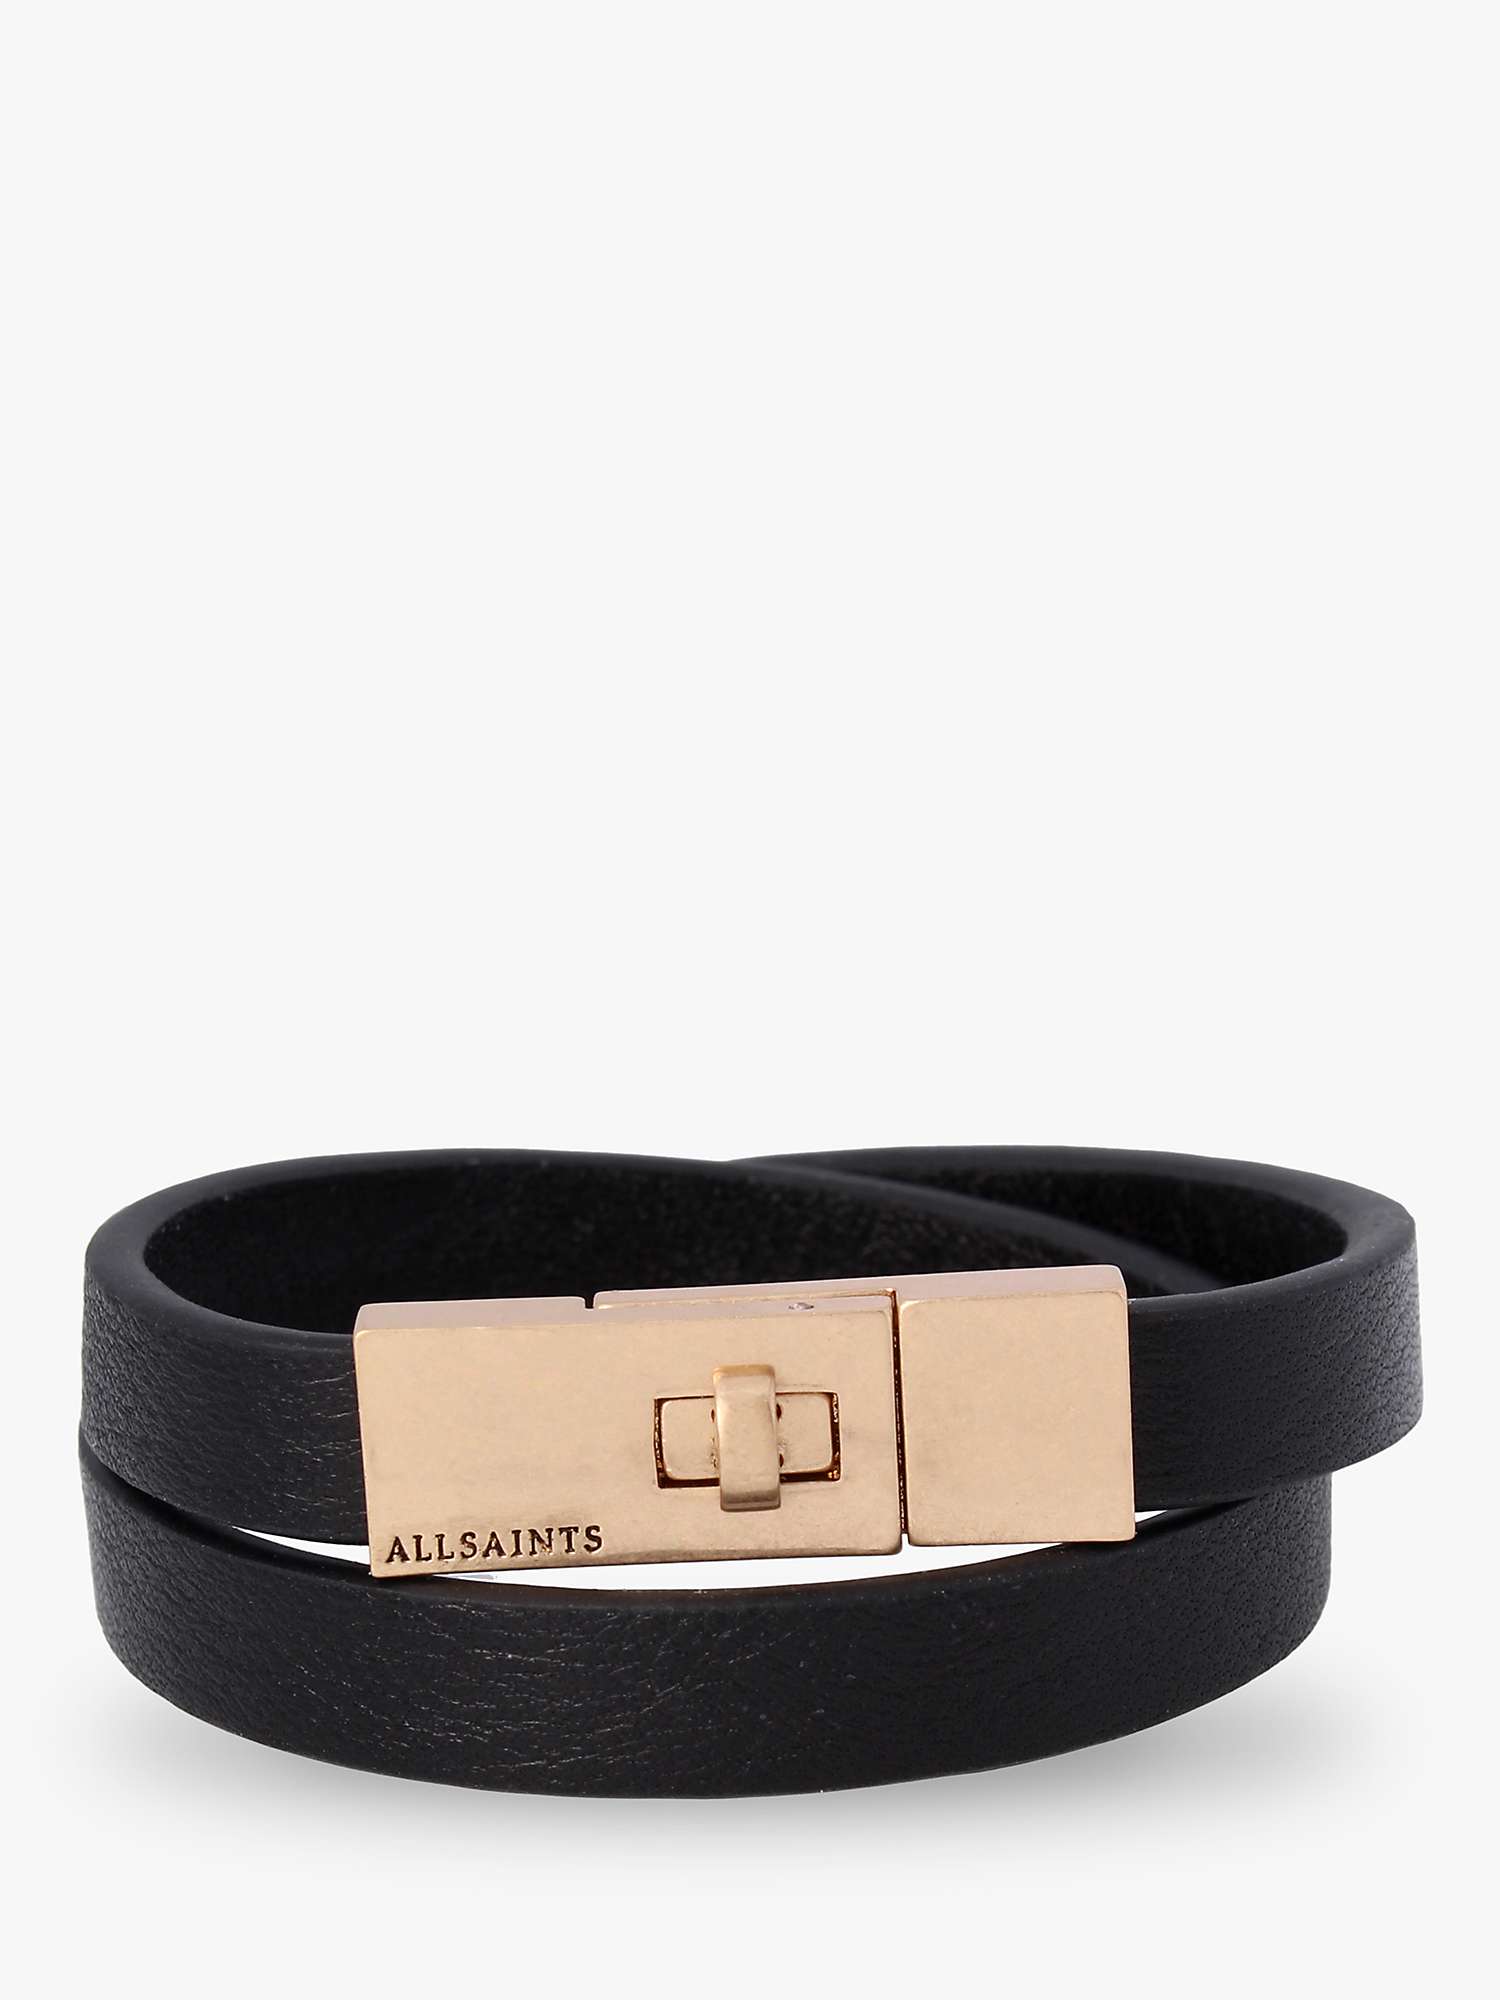 Buy AllSaints Leather Wrap Turnlock Bracelet, Black/Warm Brass Online at johnlewis.com